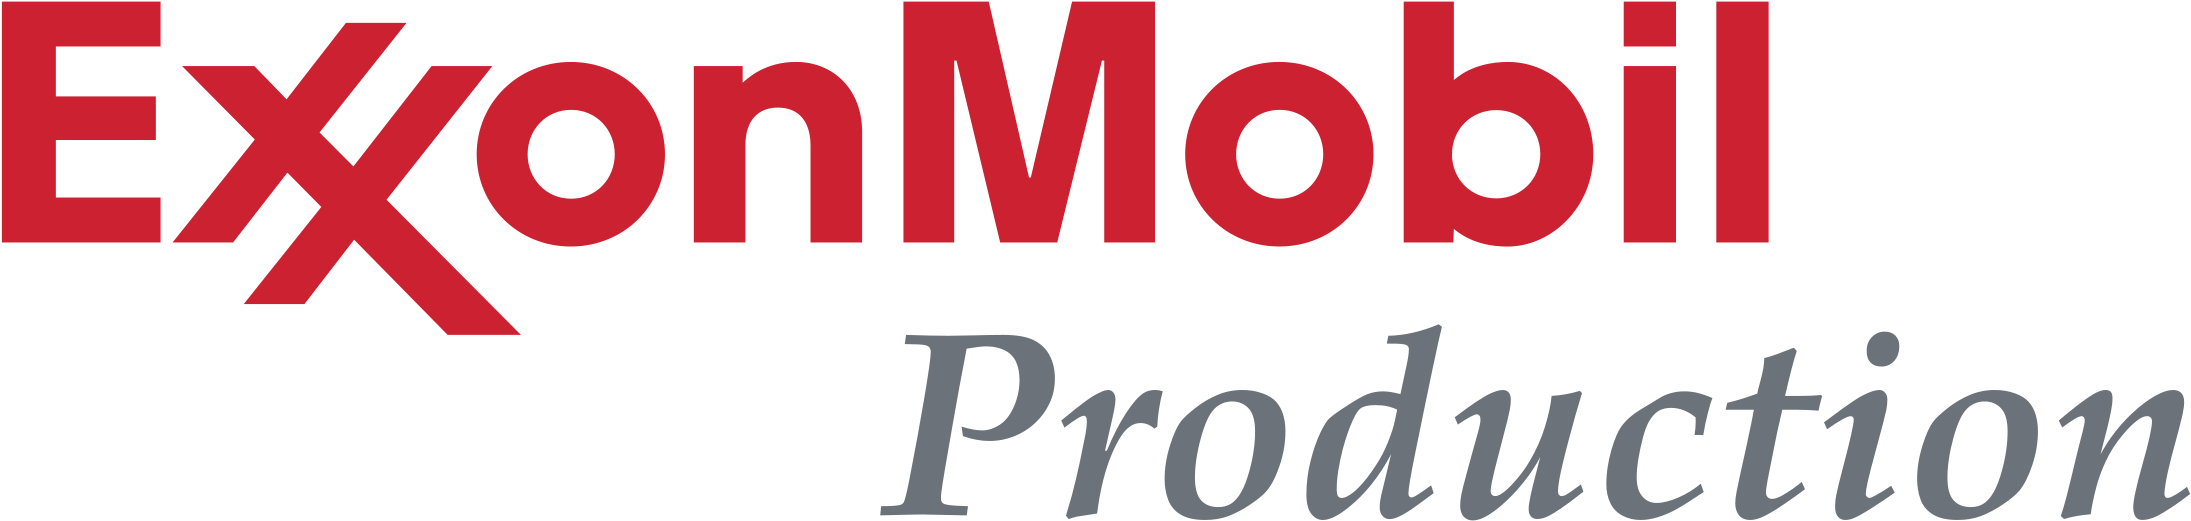 Exxonmobil Production Logo Png Transparent - Exxon Mobil (2400x2400), Png Download